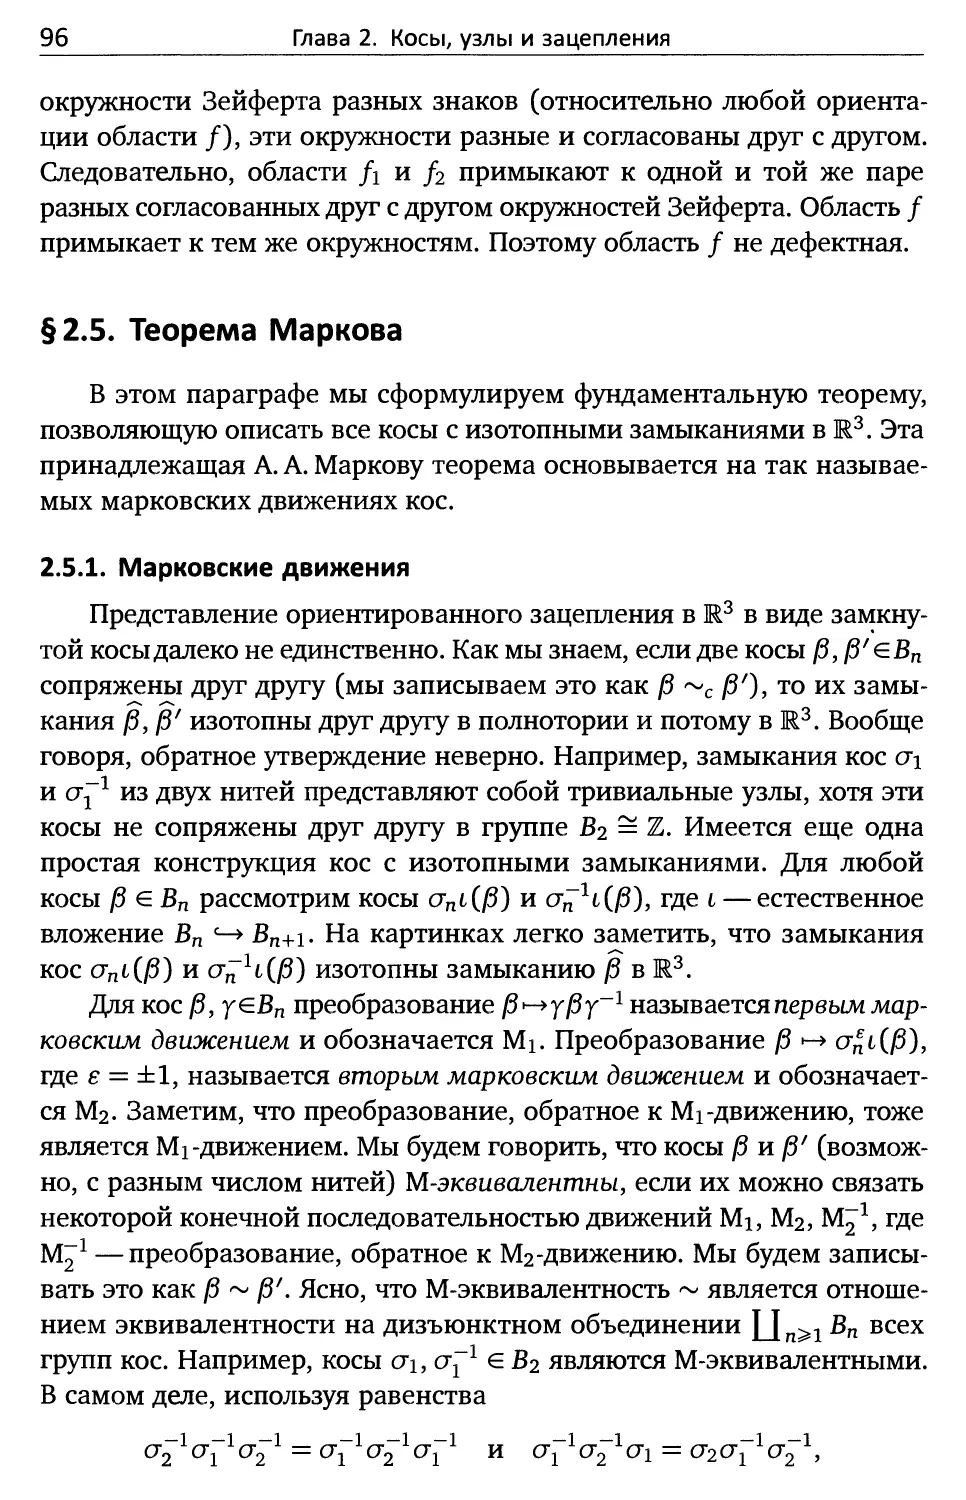 § 2.5. Теорема Маркова